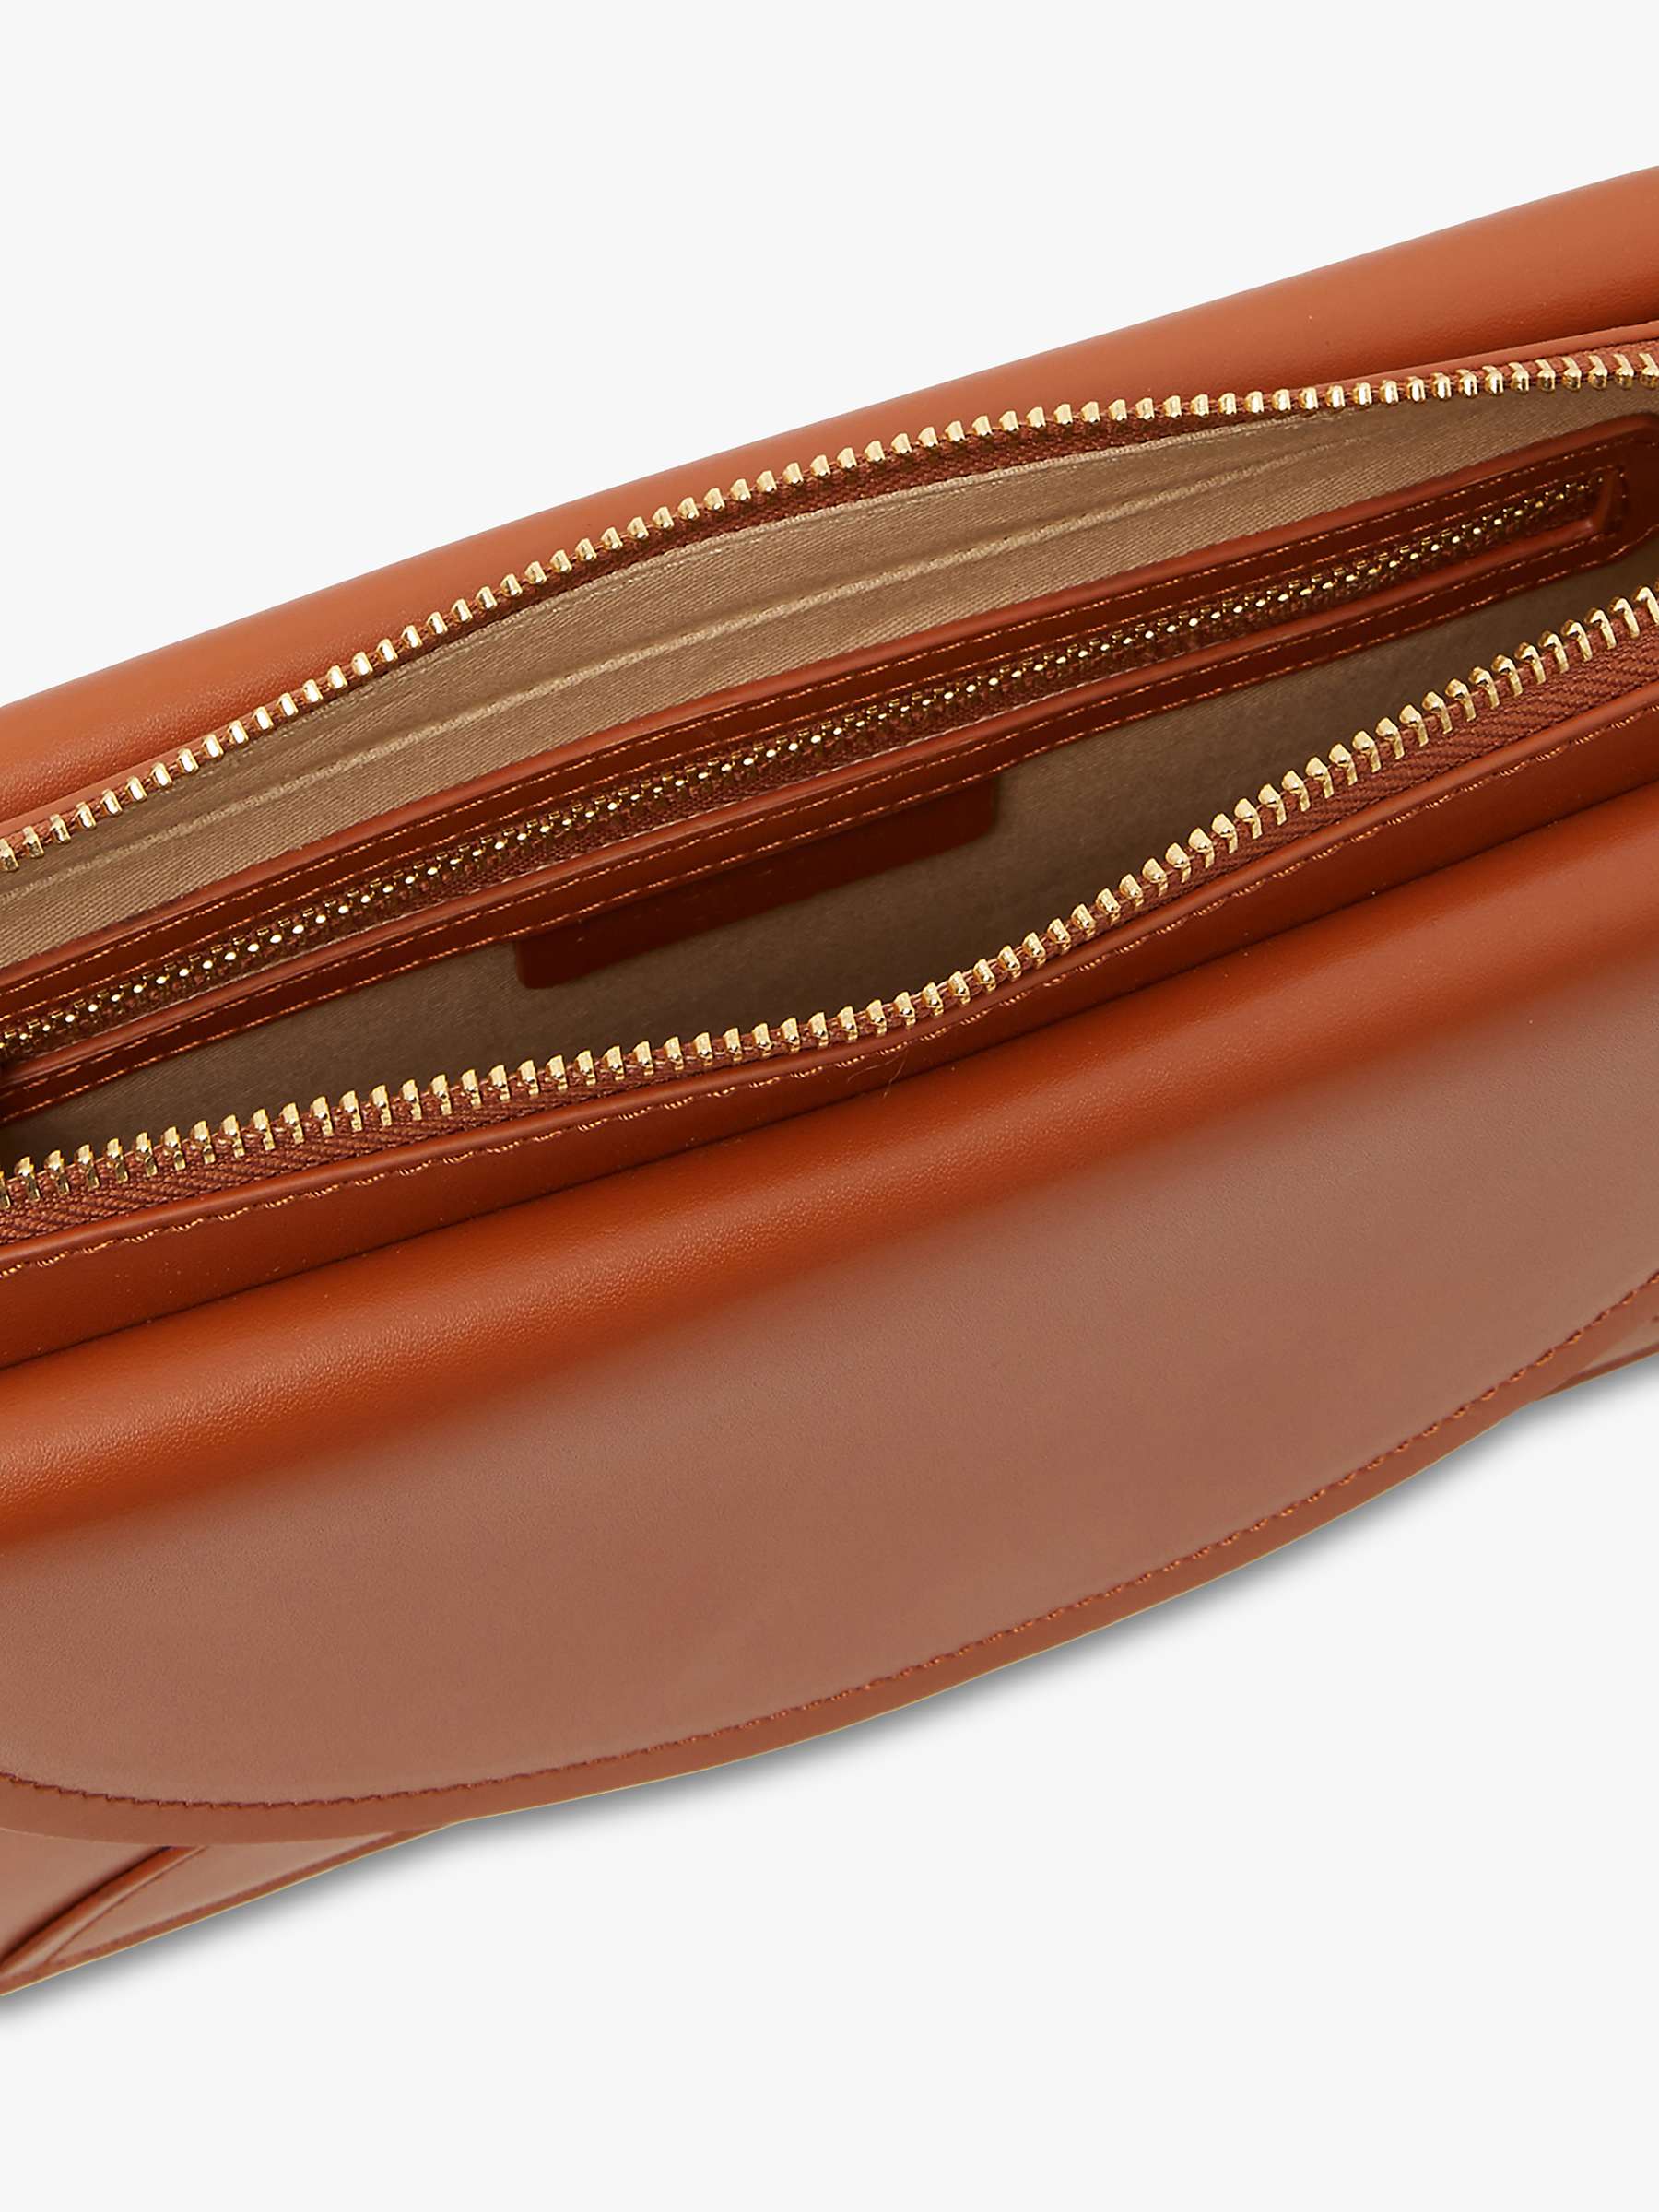 Buy Jasper Conran London Darcey Leather Double Flap Cross Body Bag Online at johnlewis.com